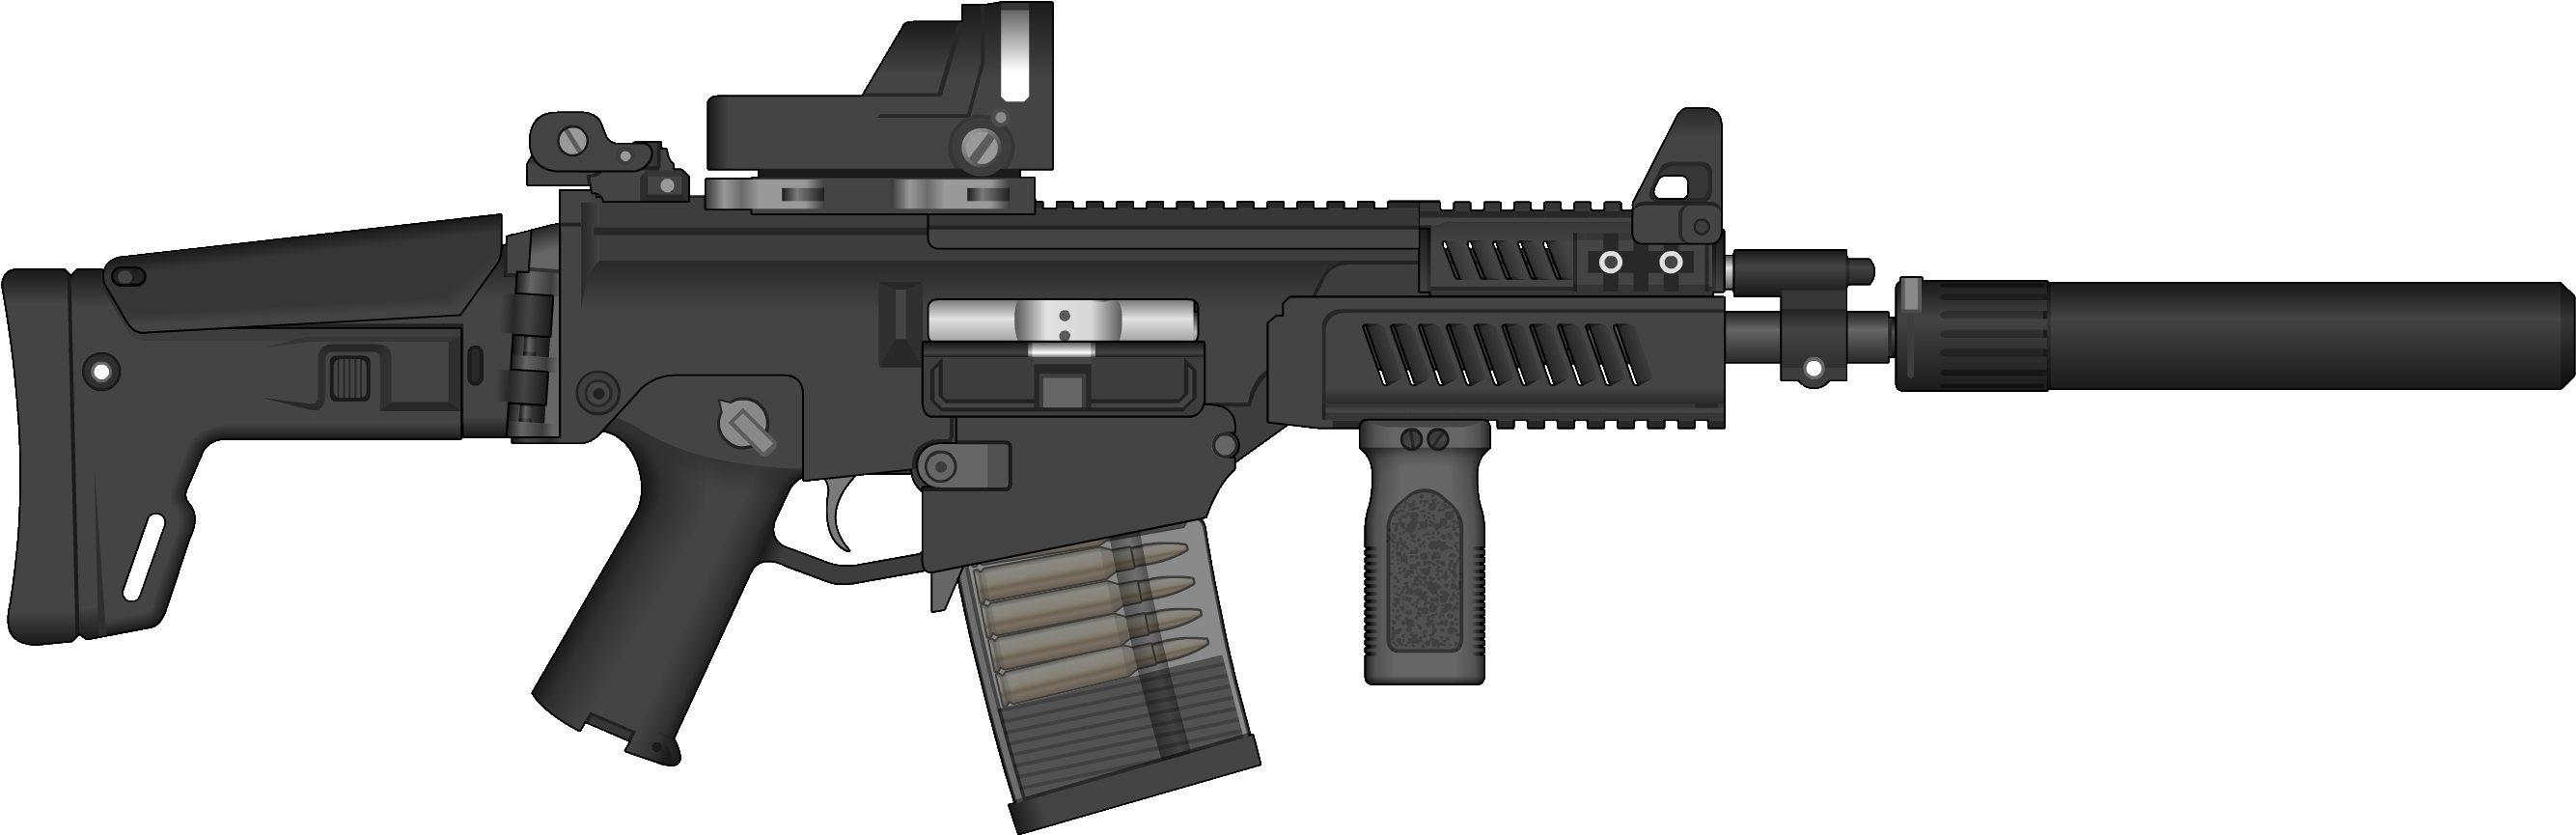 Modern Assault Rifle Illustration PNG